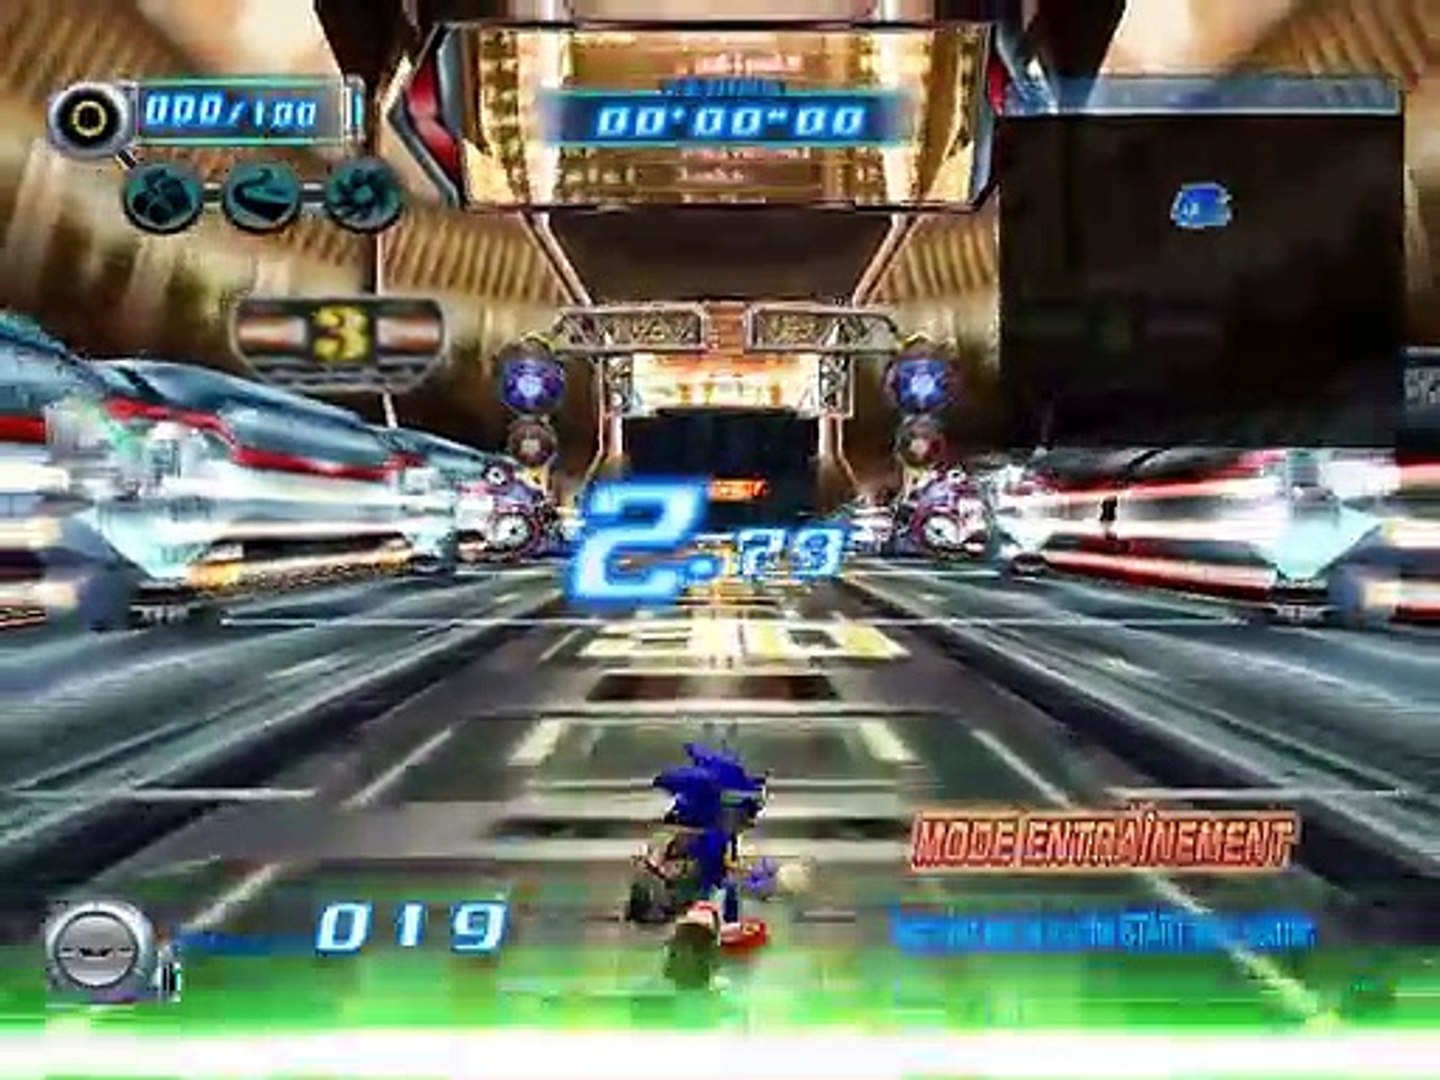 Maratona Sonic: Sonic Riders (Game Cube, PlayStation 2, Xbox, Windows)